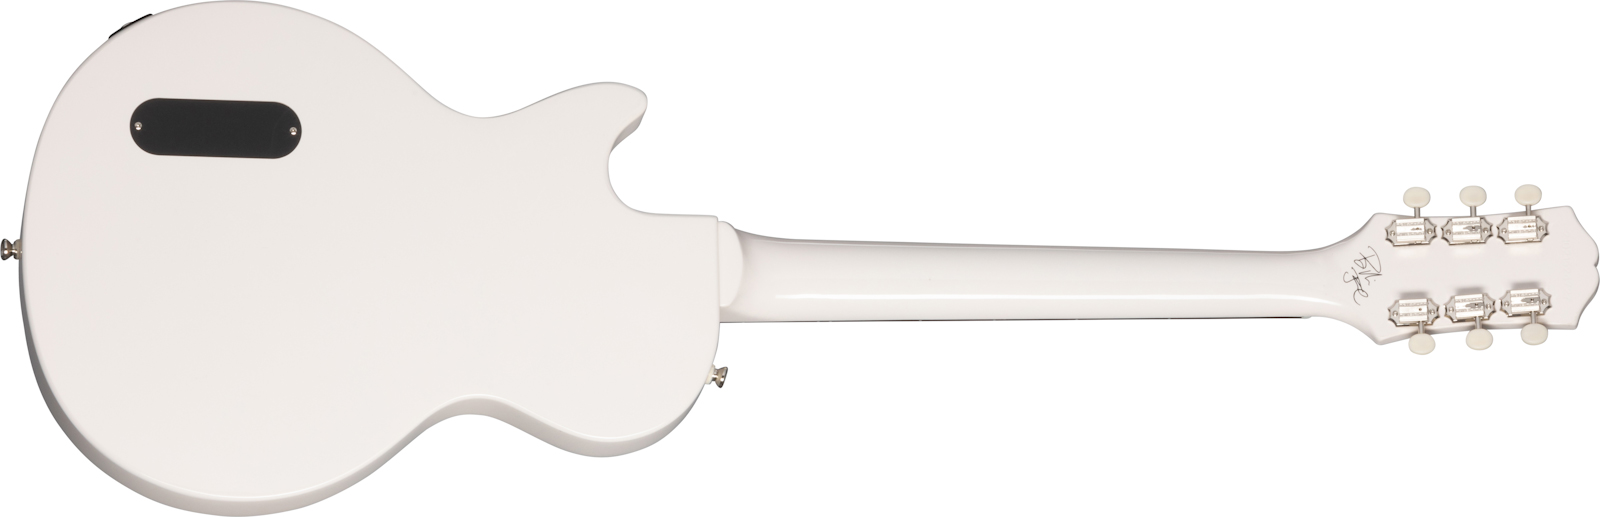 Epiphone Billie Joe Armstrong Les Paul Junior Signature S P90 Ht Lau - Classic White - Enkel gesneden elektrische gitaar - Variation 1